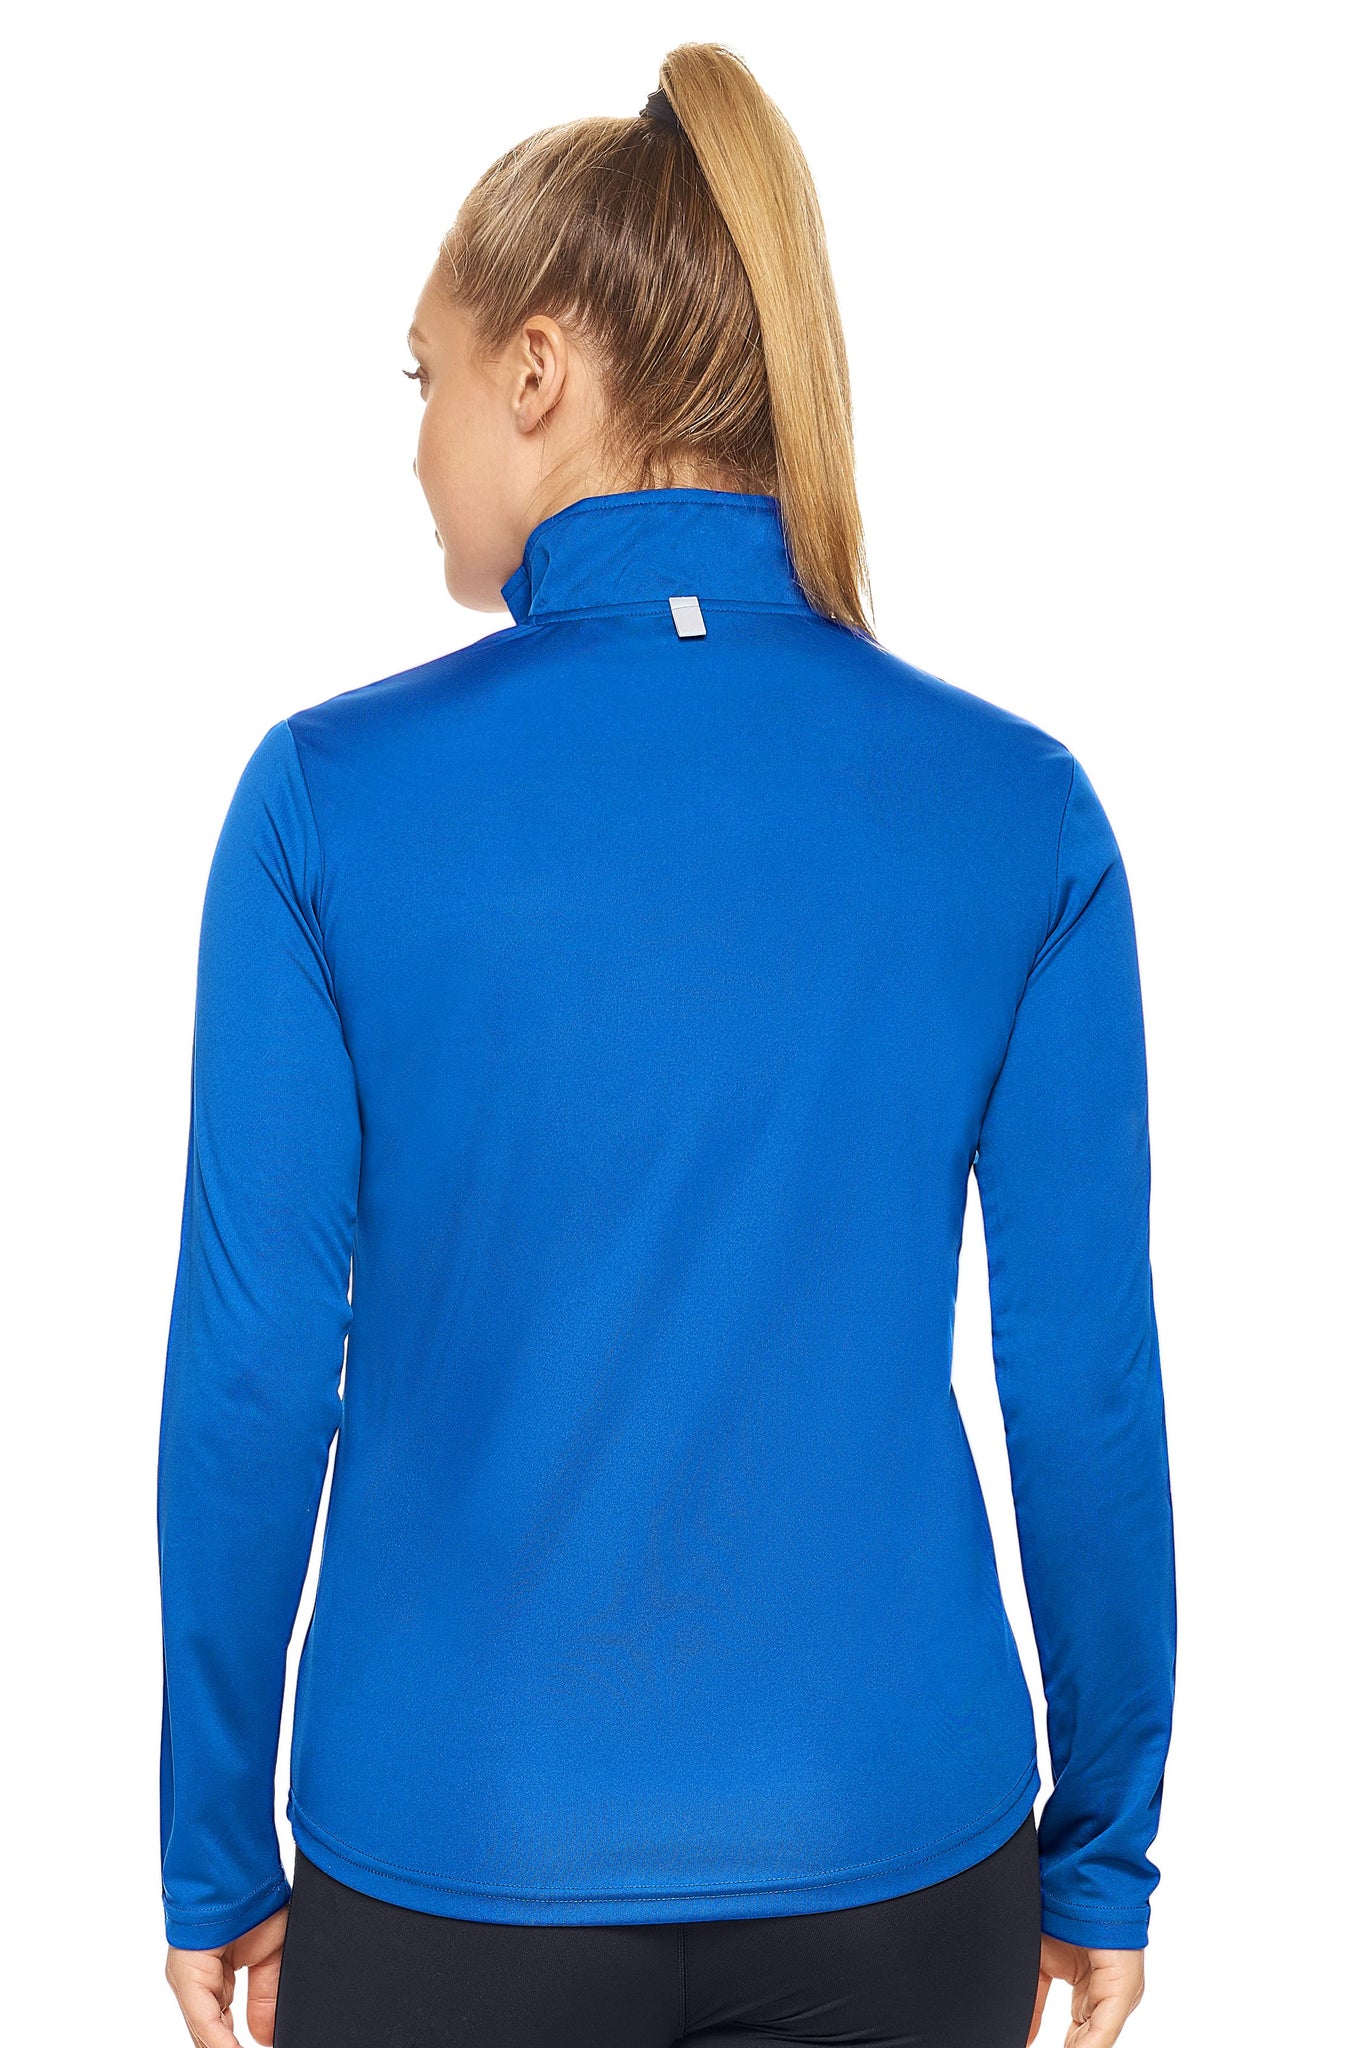 Expert Brand Women's Royal Blue pk MaX™ ¼ Zip Training Image 3#royal-blue